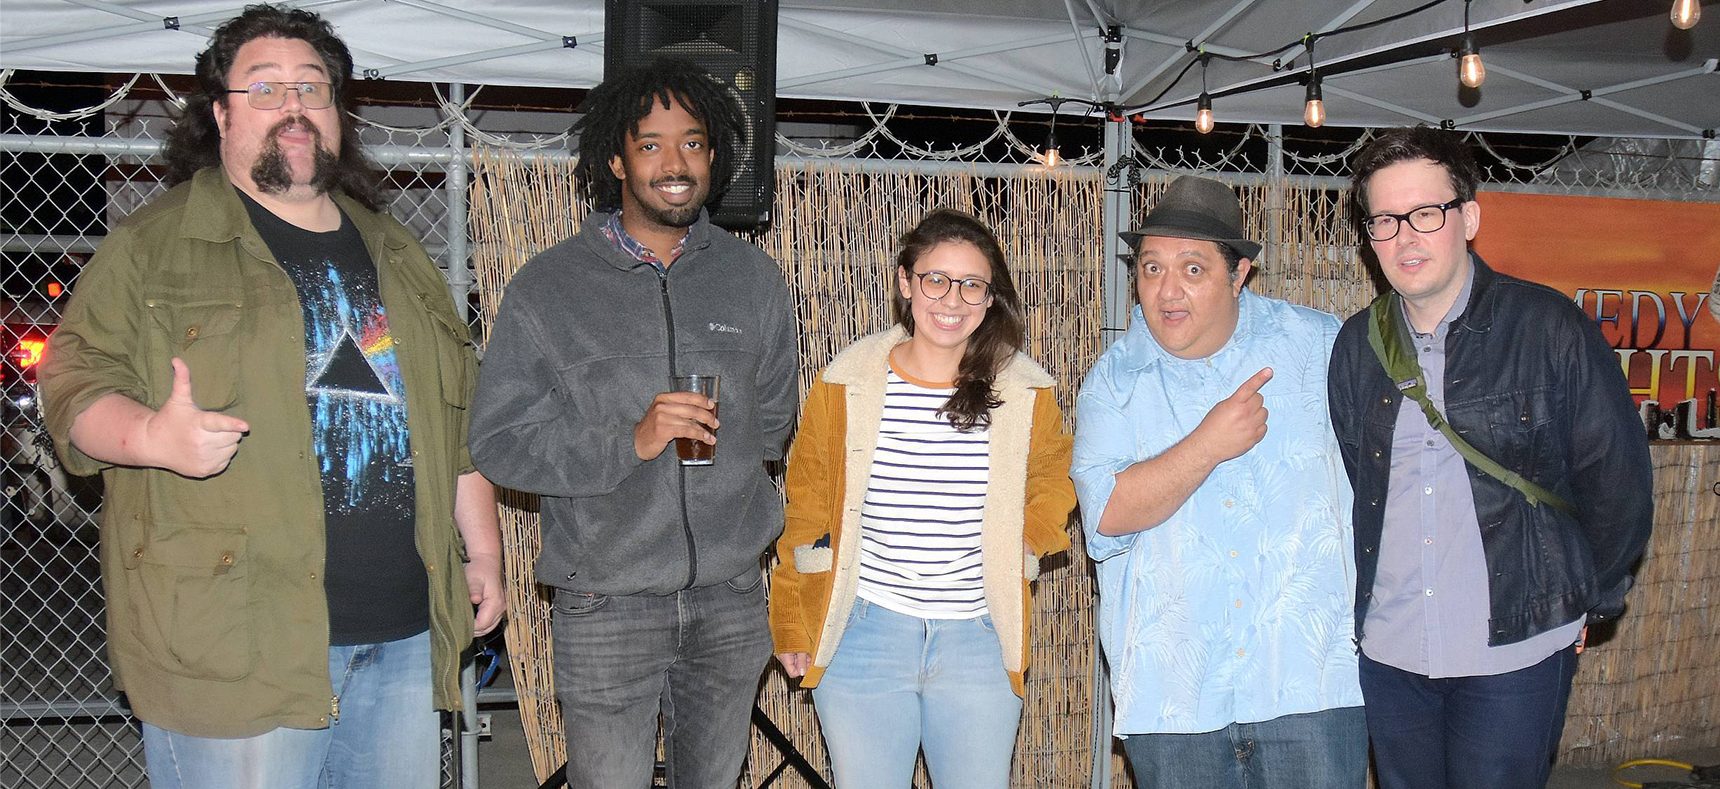 Fantastic show last night at Comedy Heights at Bay Bridge Brewing!